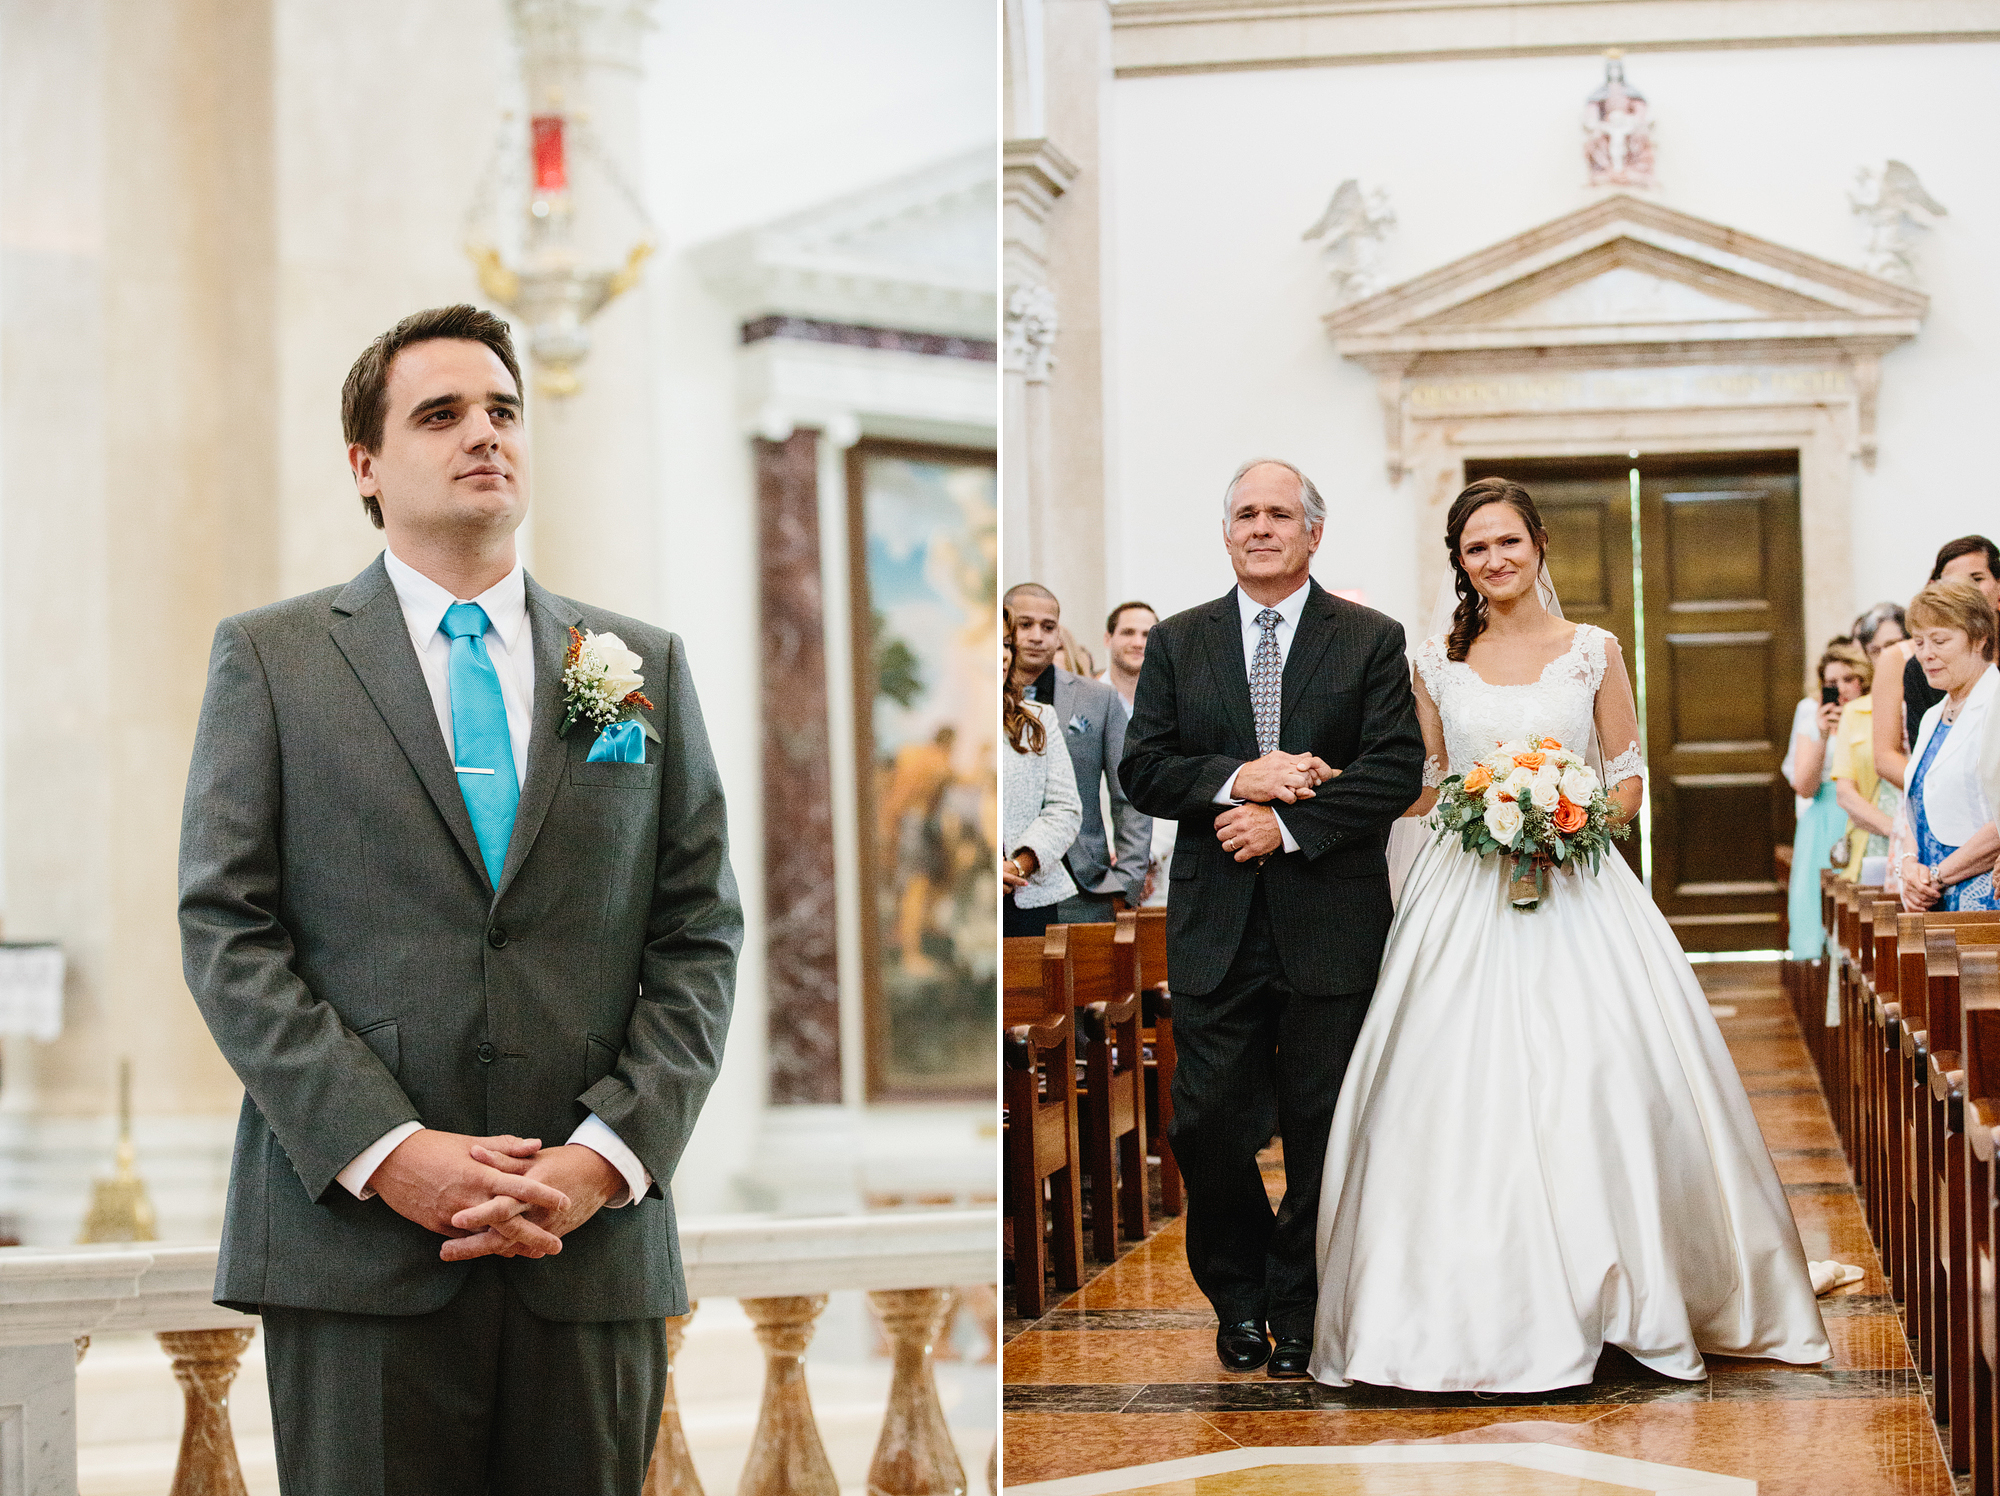 These are photos of Annie and Chris while Annie was walking down the aisle at their St Thomas Aquinas Church Ojai wedding.